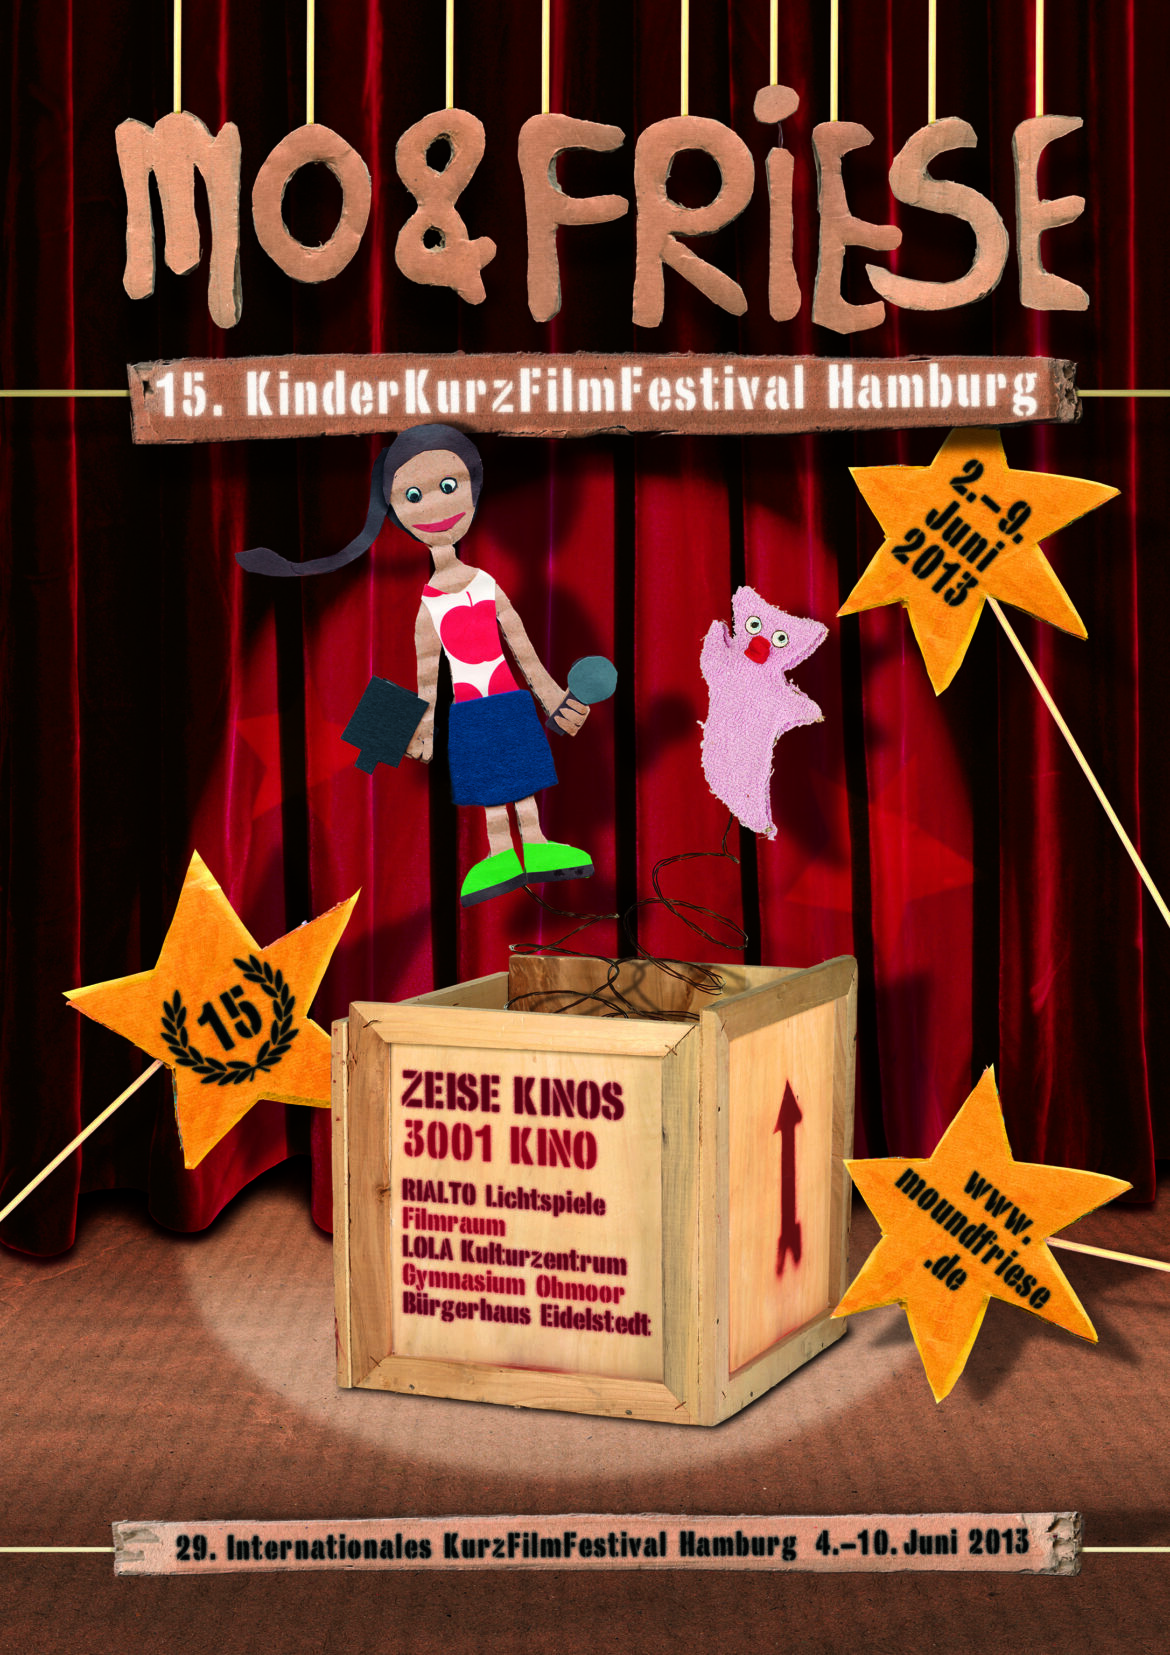 08.06.15 Film: Mo&Friese Kinder KurzFilmFestival